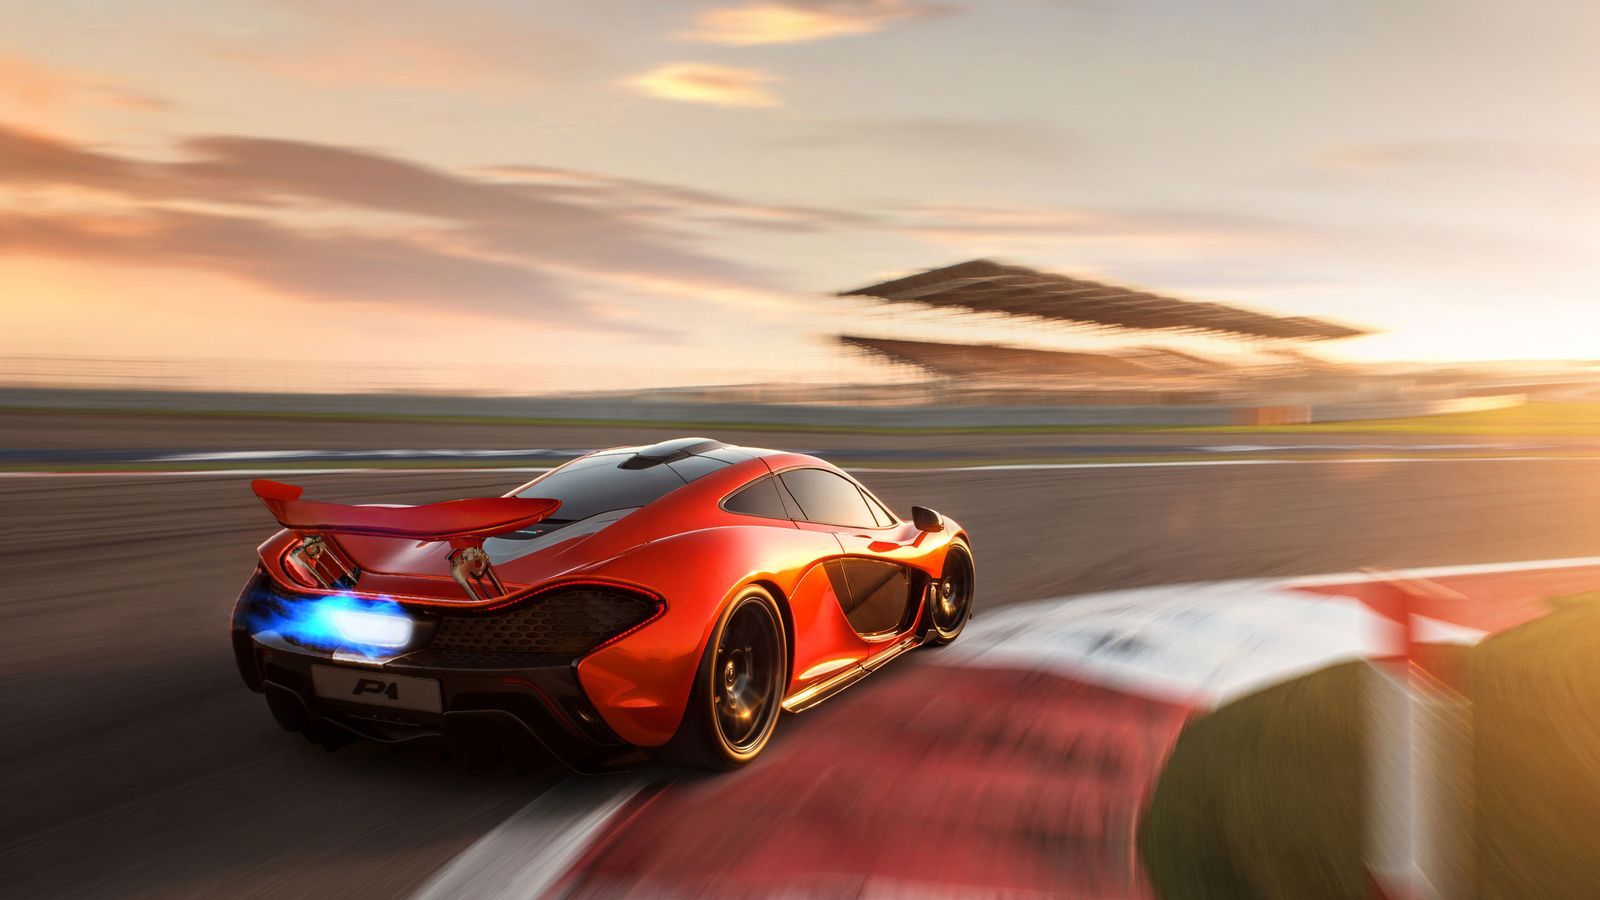 McLaren supercar wallpaper download 49679 - Business Class People ...